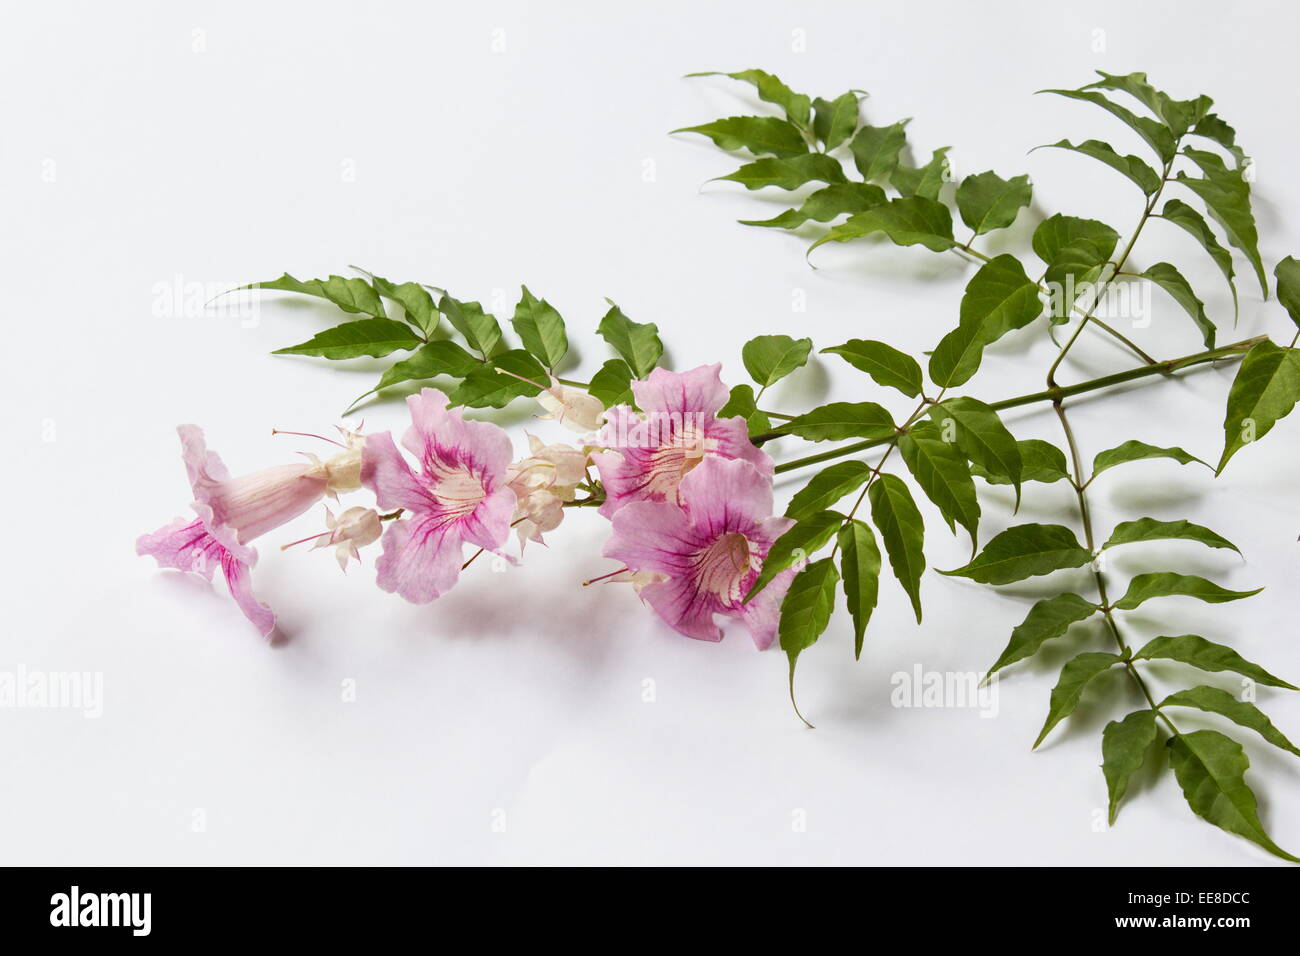 Pink Trumpet Vine (Podranea ricasoliana) on white background Stock Photo